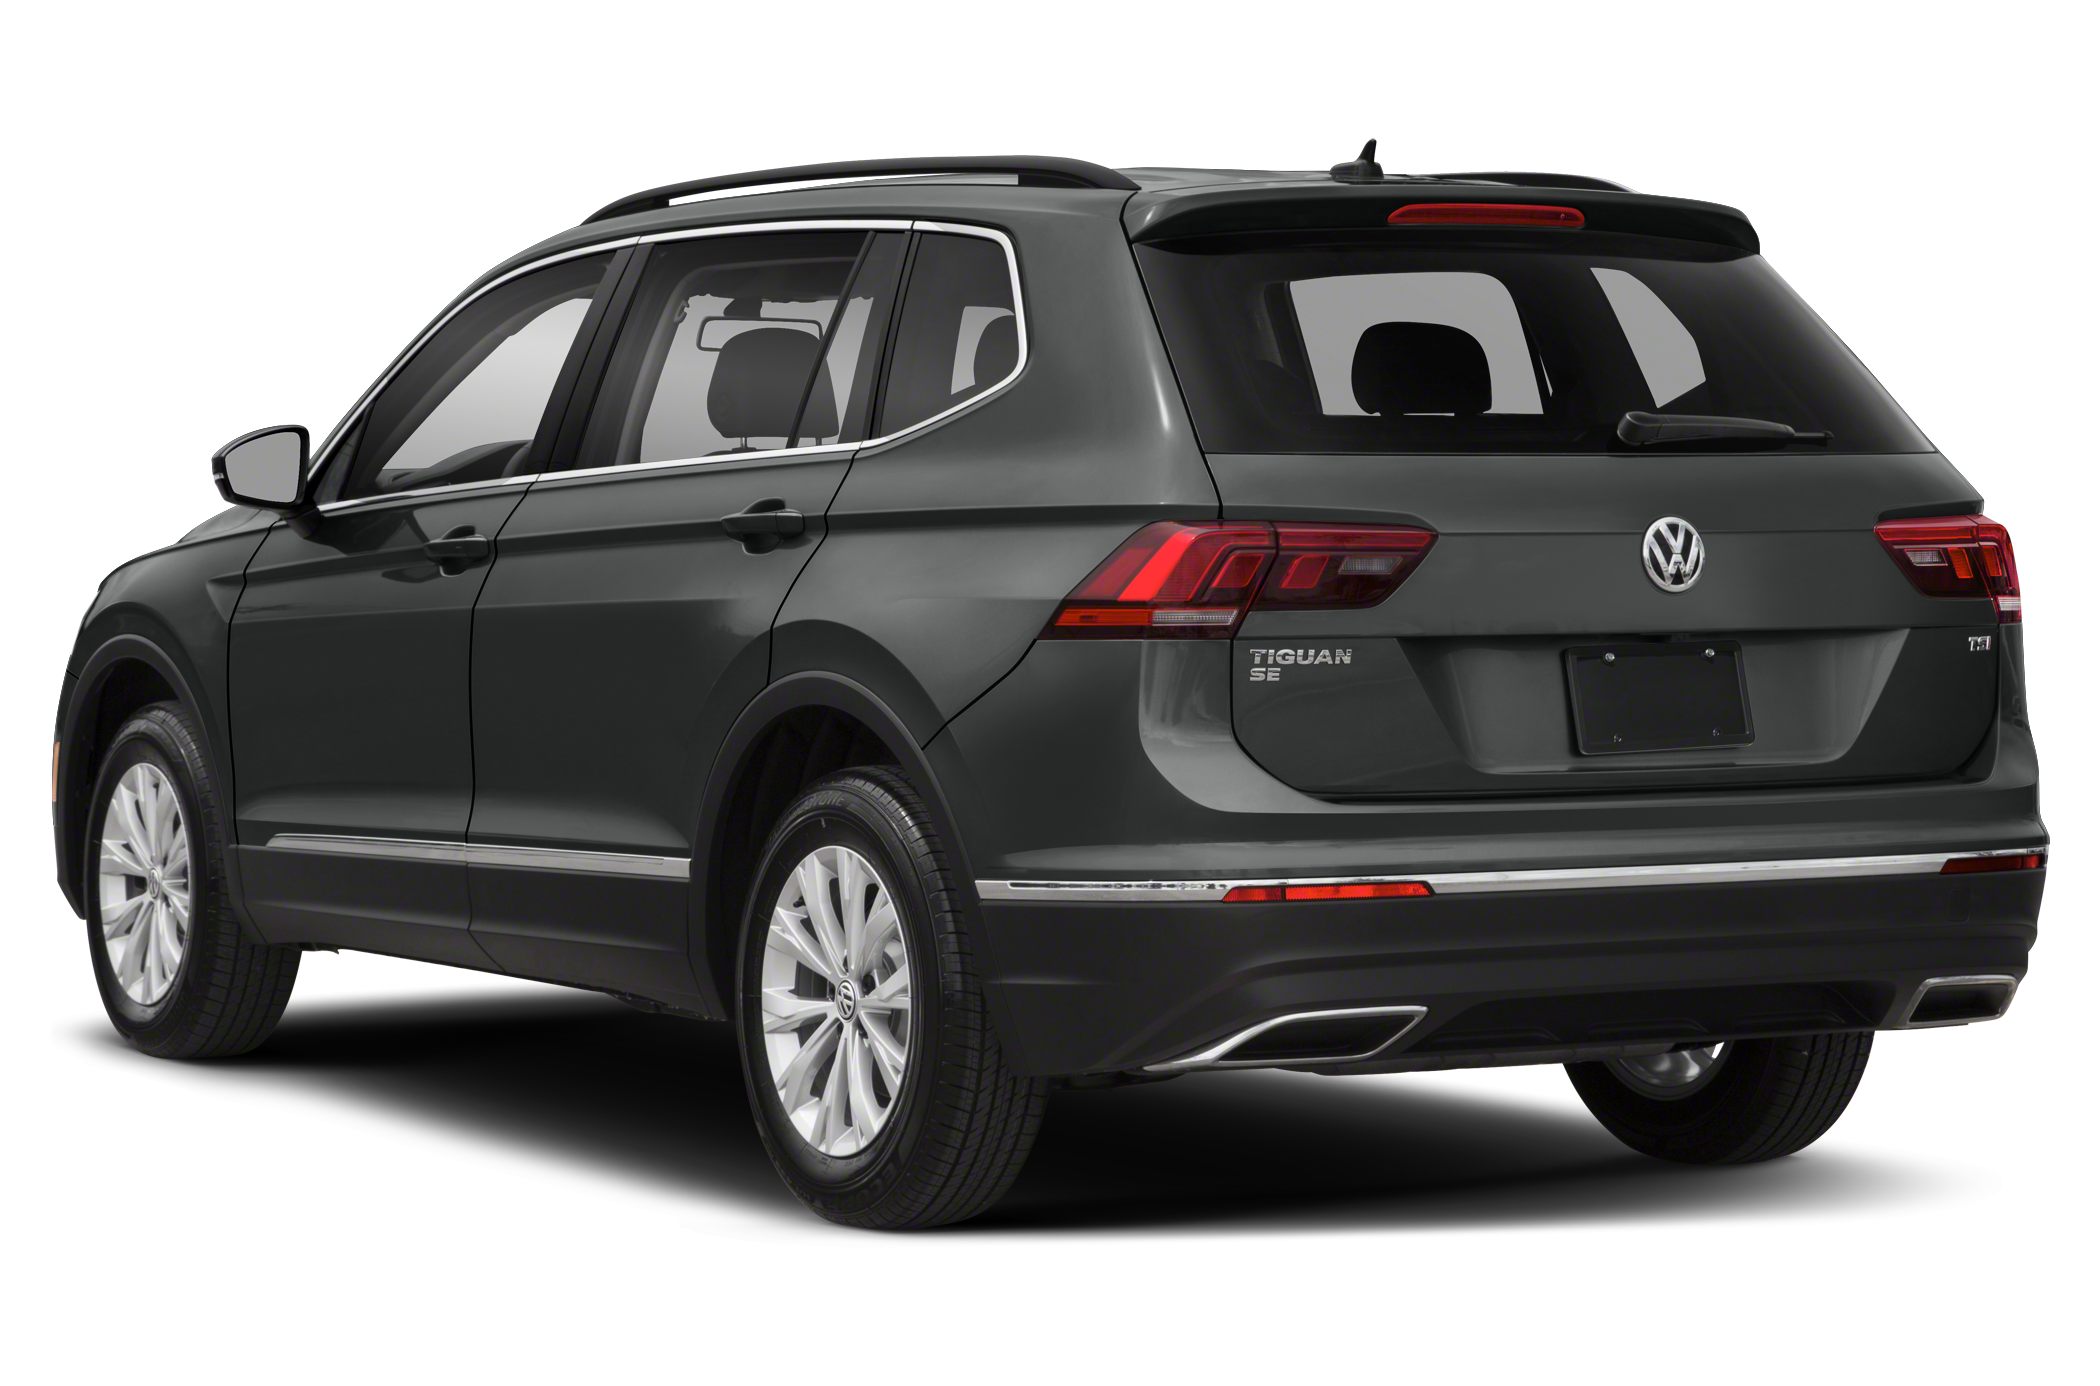 2021 Volkswagen Tiguan MPG, Price, Reviews & Photos ...